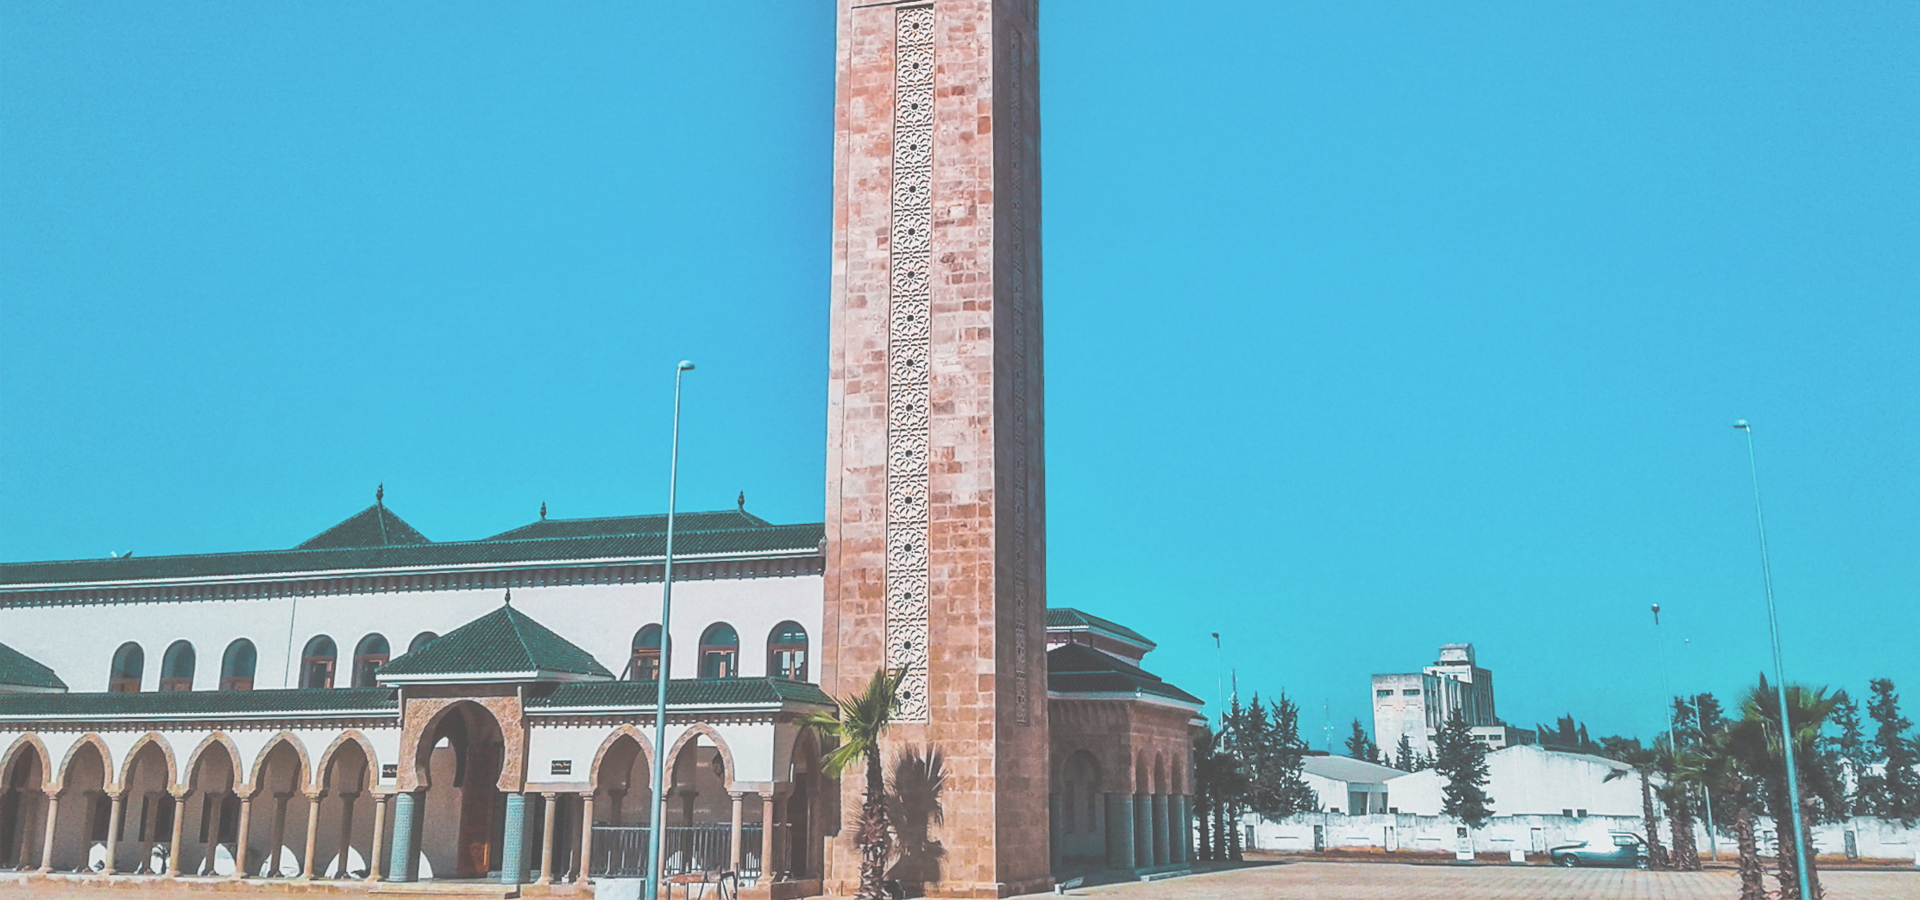 <b>Khemisset, Rabat-Salé-Kénitra Region, Morocco</b>